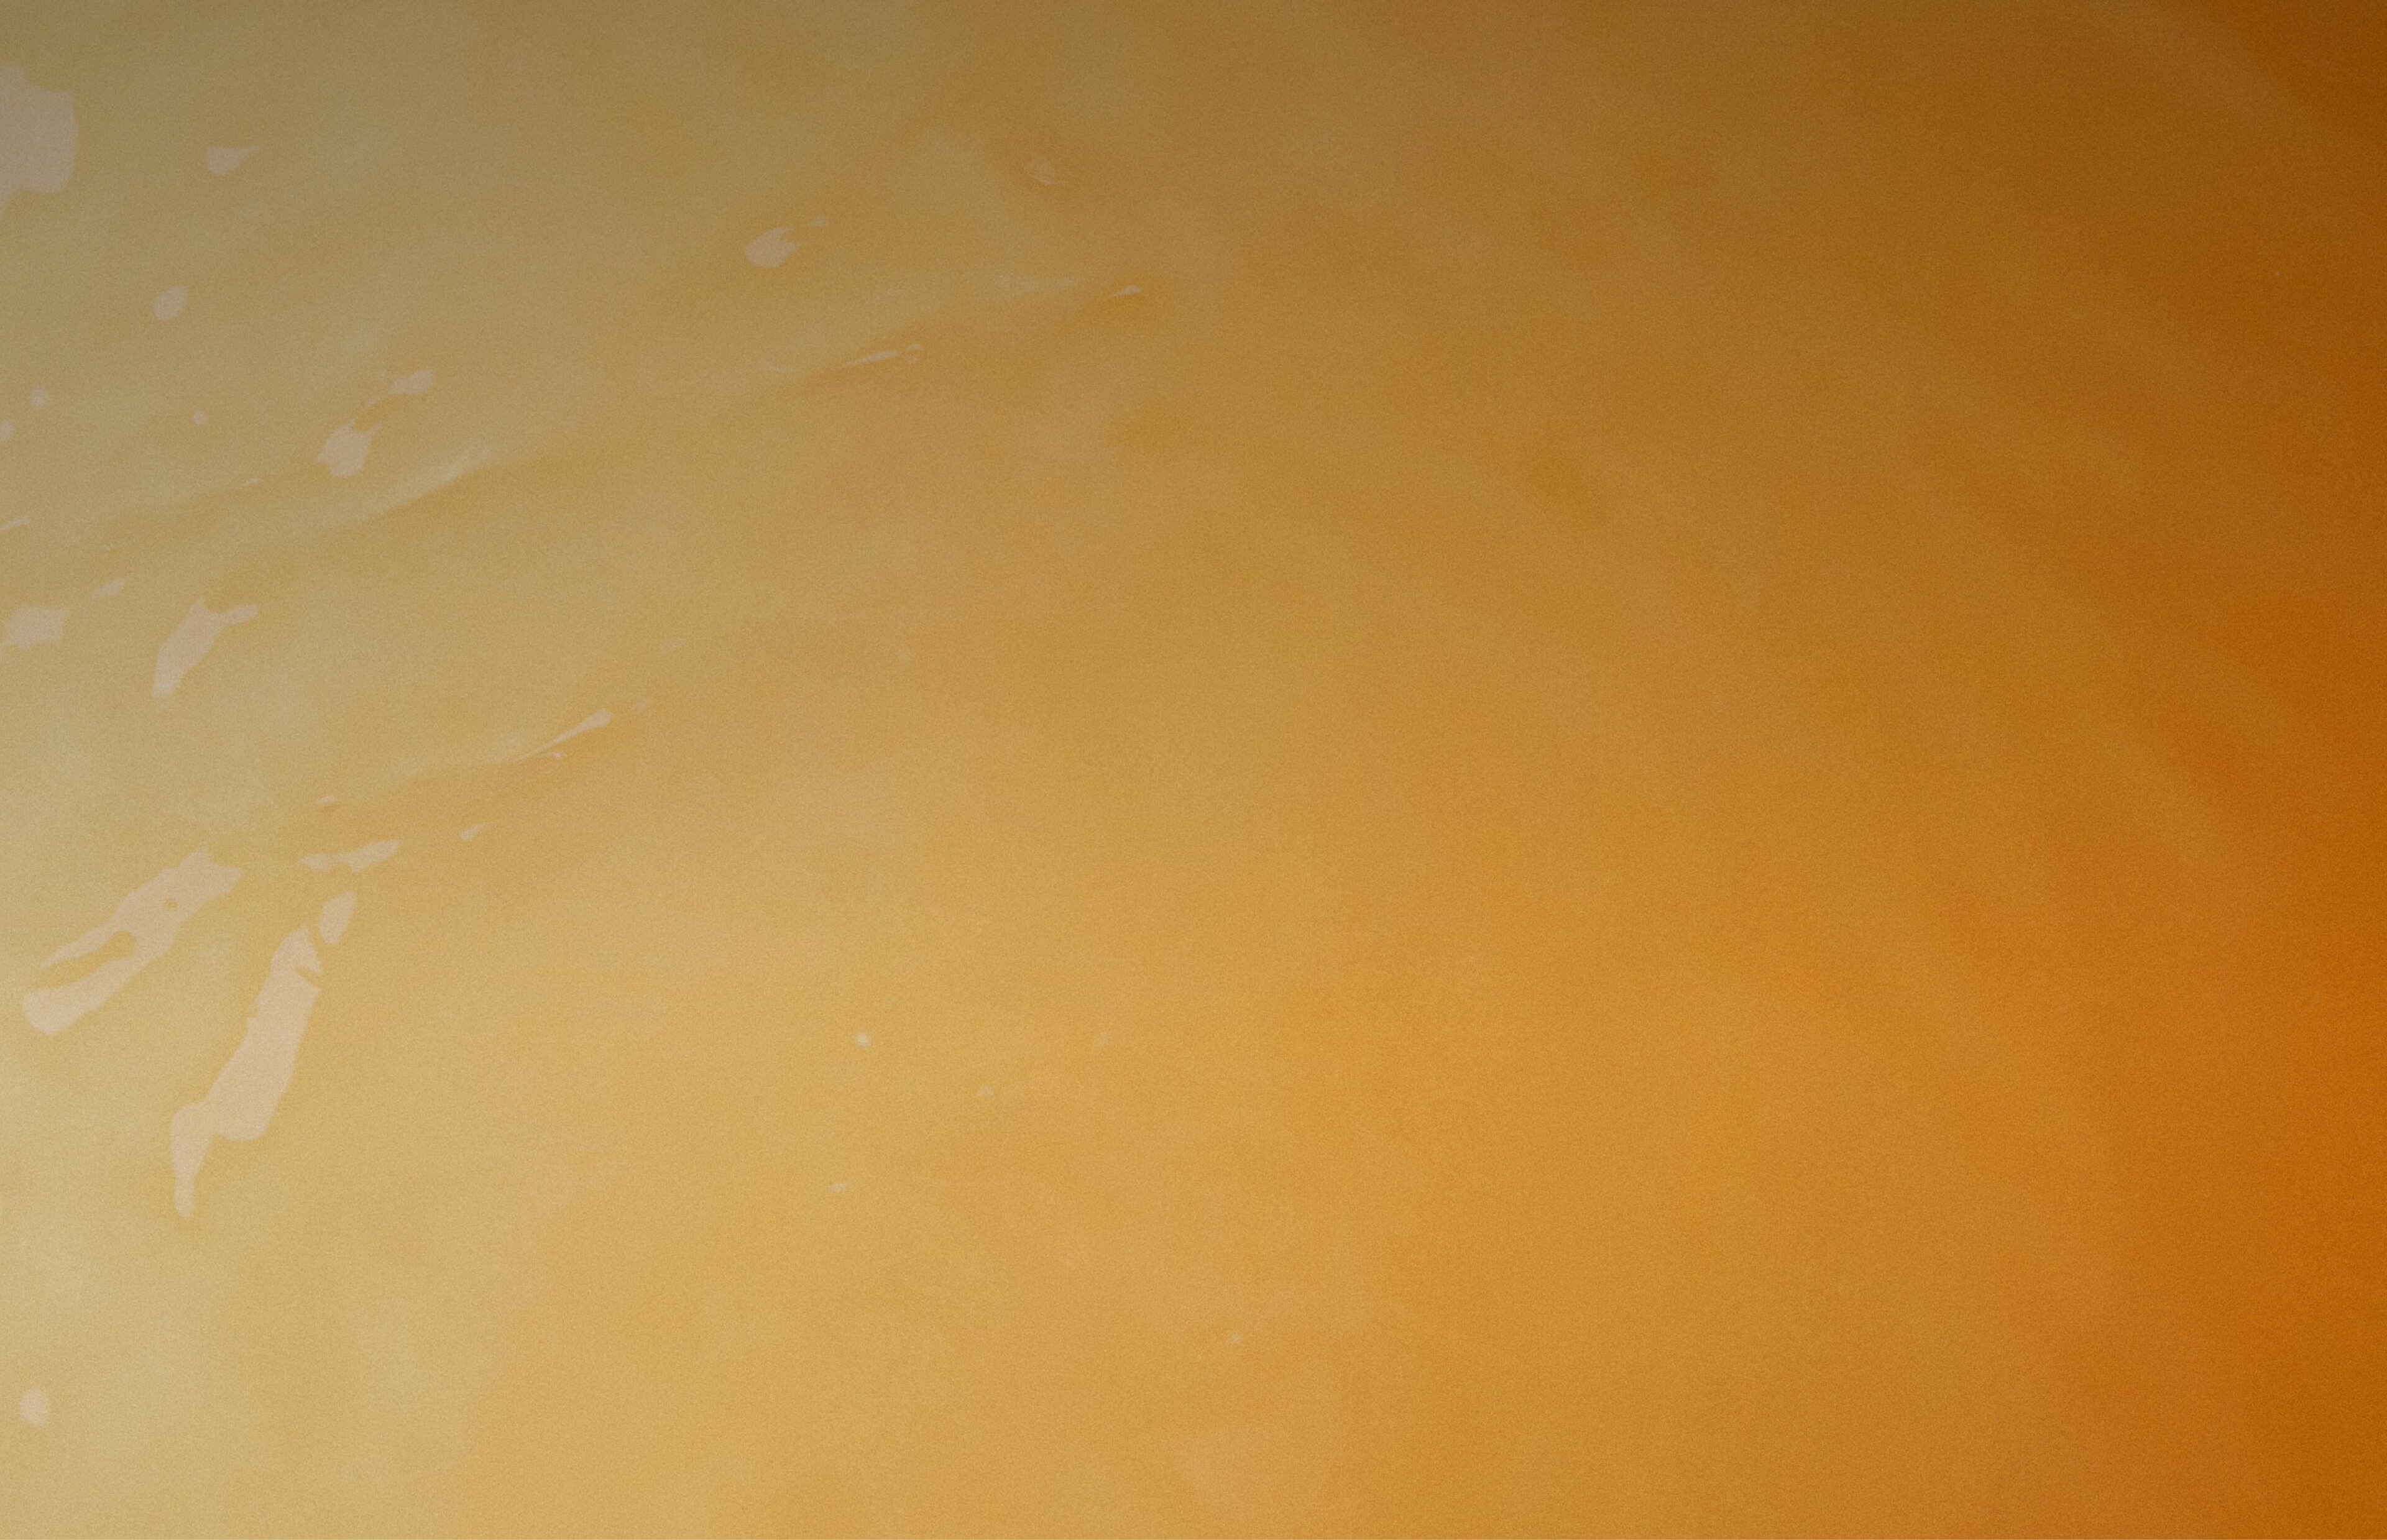 An orange liquid calmly rippling into the distance.